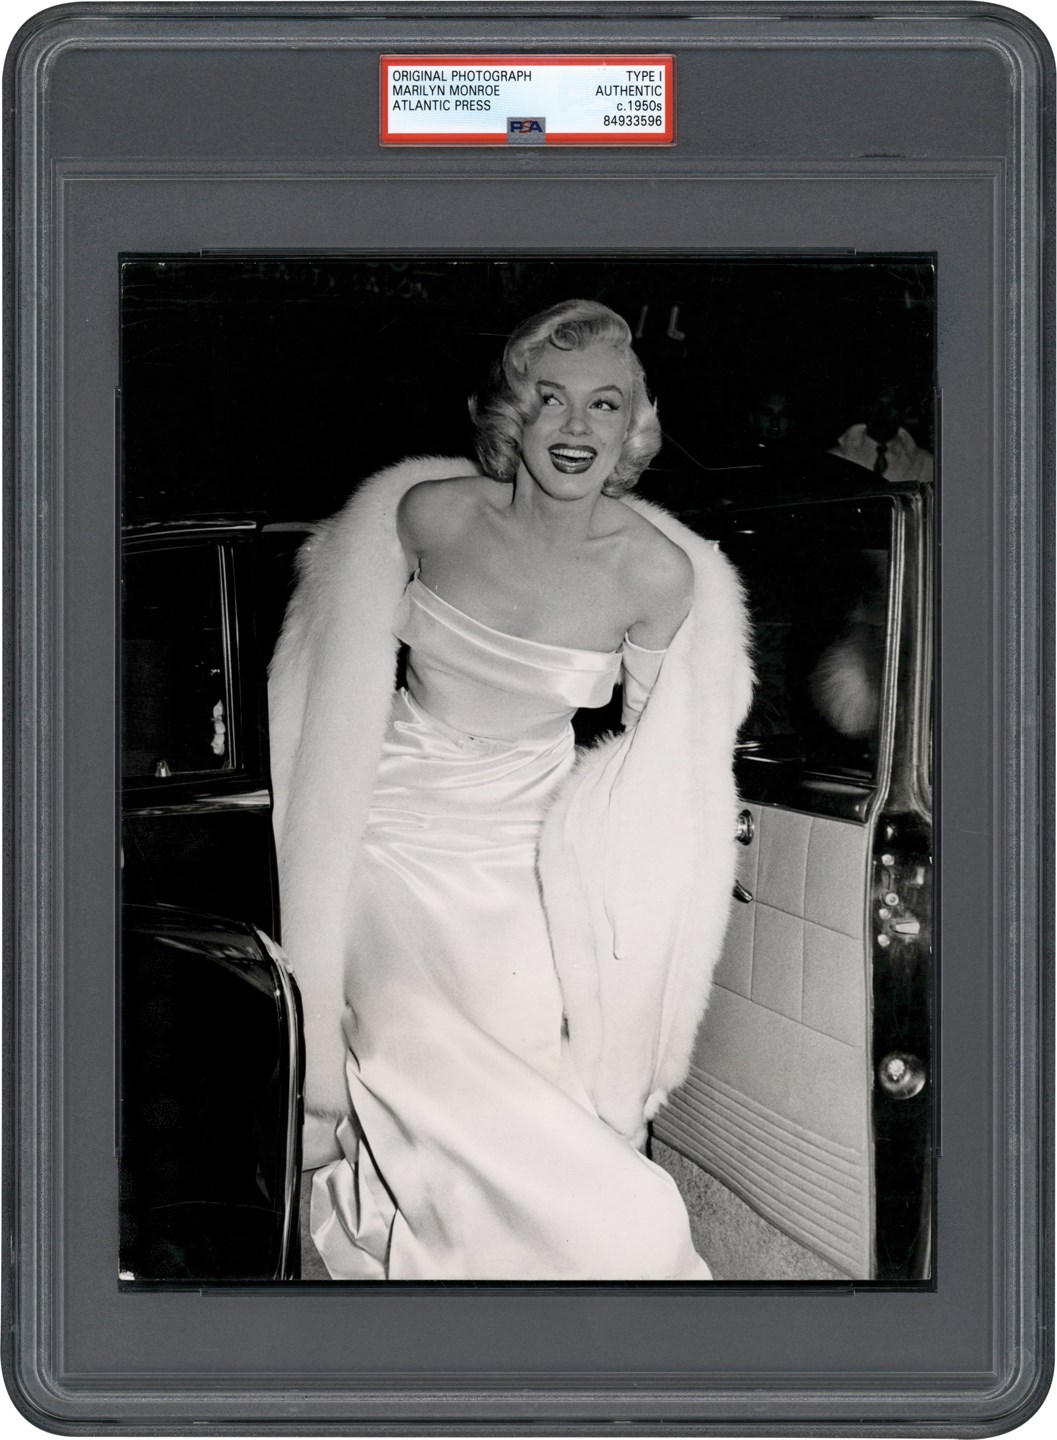 Rock And Pop Culture - Circa 1950s Marilyn Monroe Atlantic Press Original Photograph (PSA Type I)